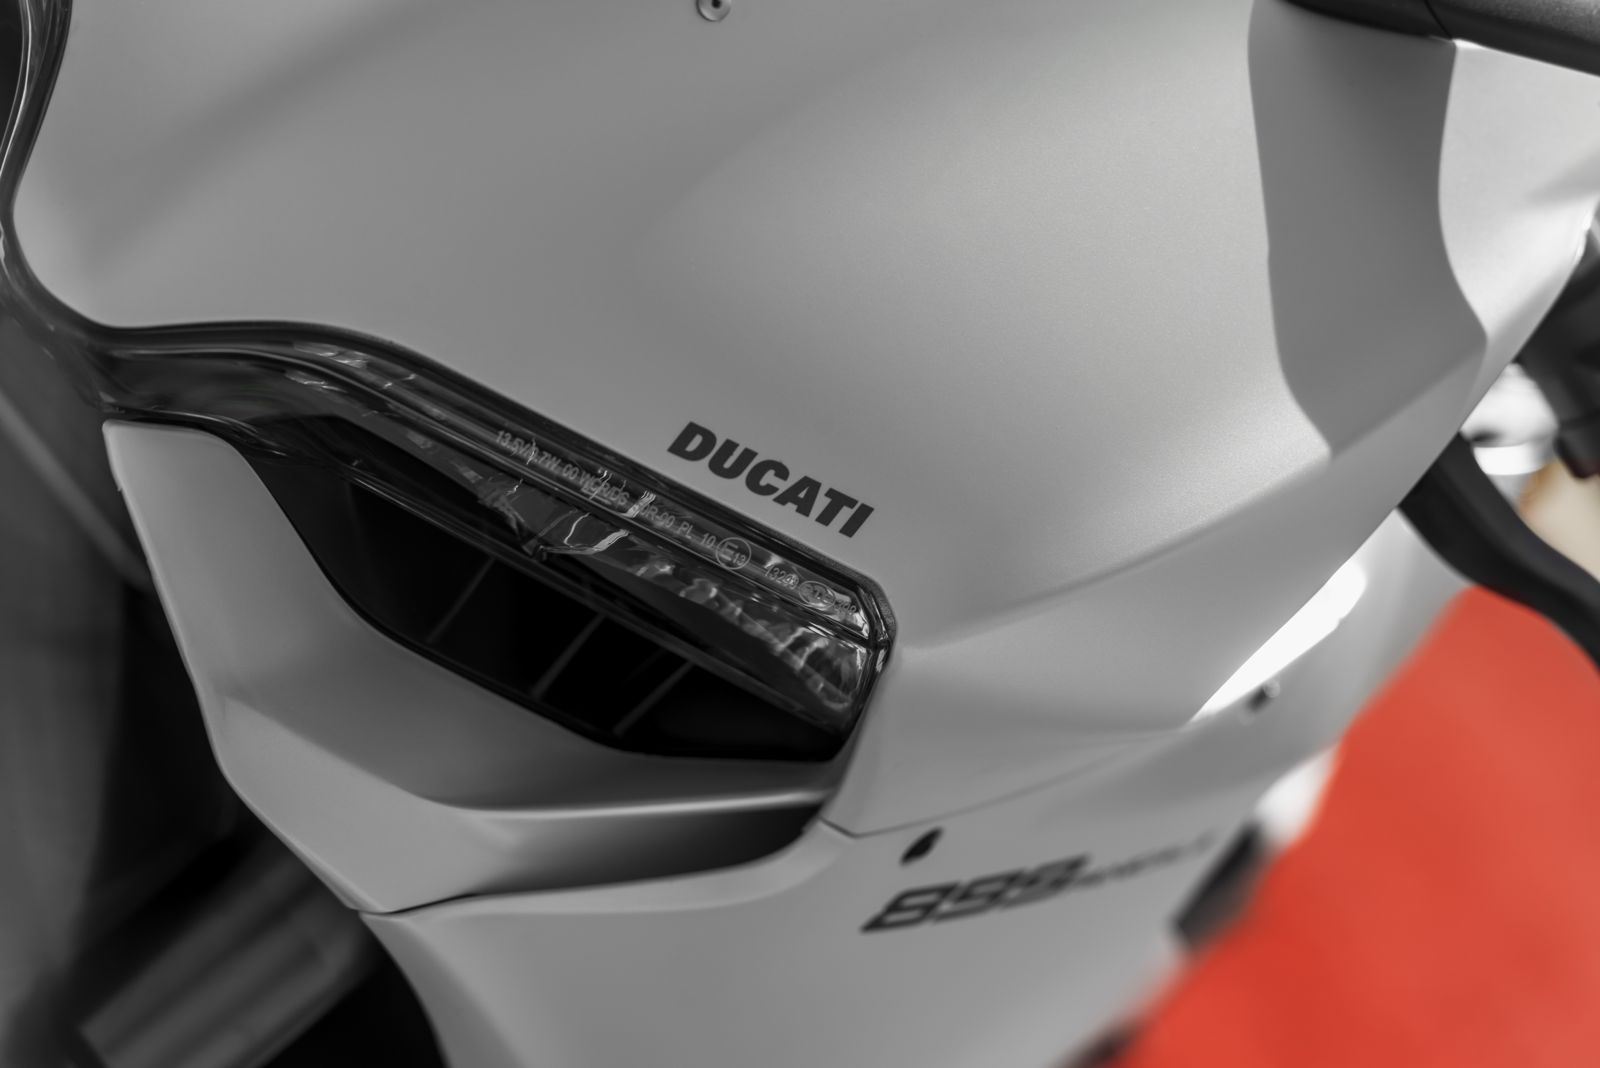 Ducati-899-Panigale-Newsbeitrag